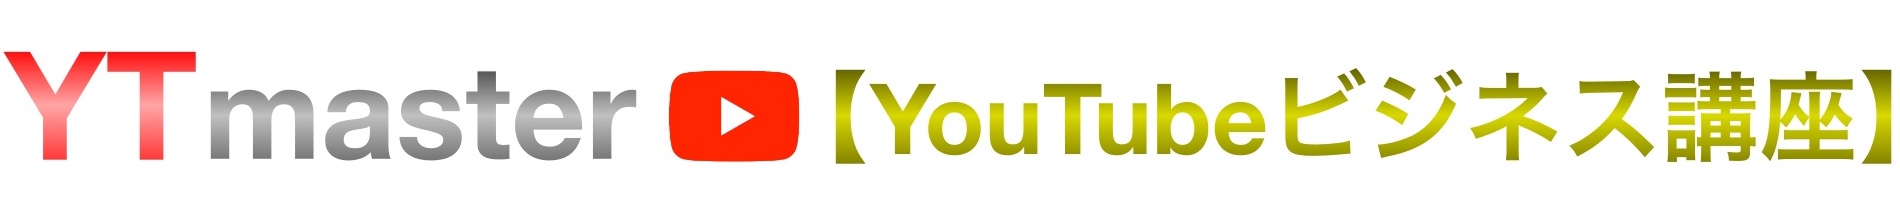 Youtubeチャンネルアートの画像サイズや設定 変更の方法 Ytmaster Youtubeビジネス講座